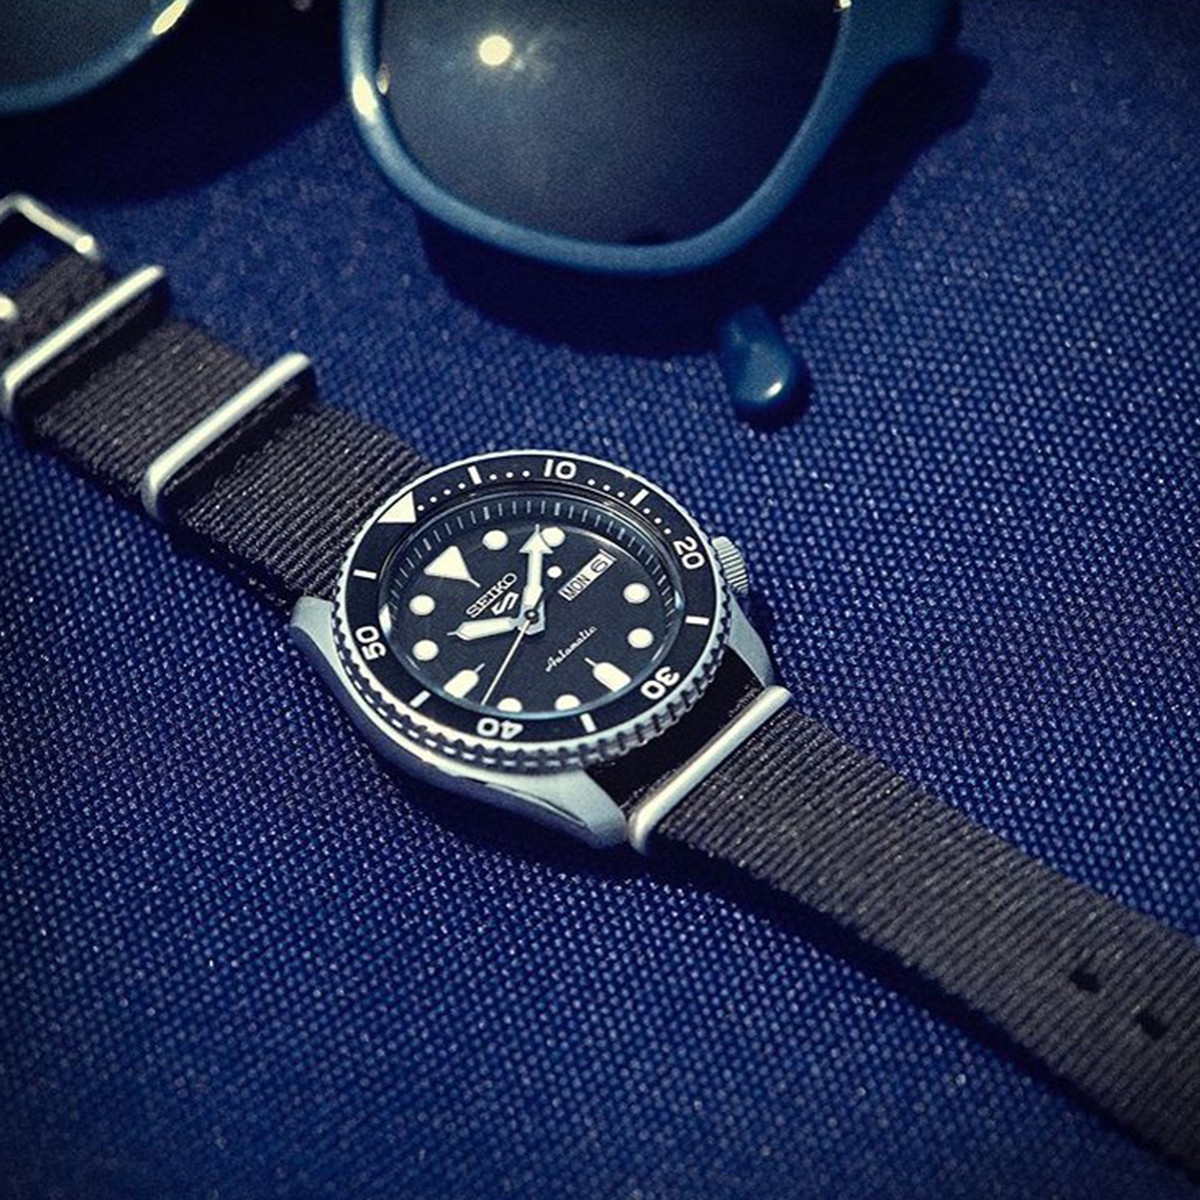 Blue Sports Watch / Watches / Zapata